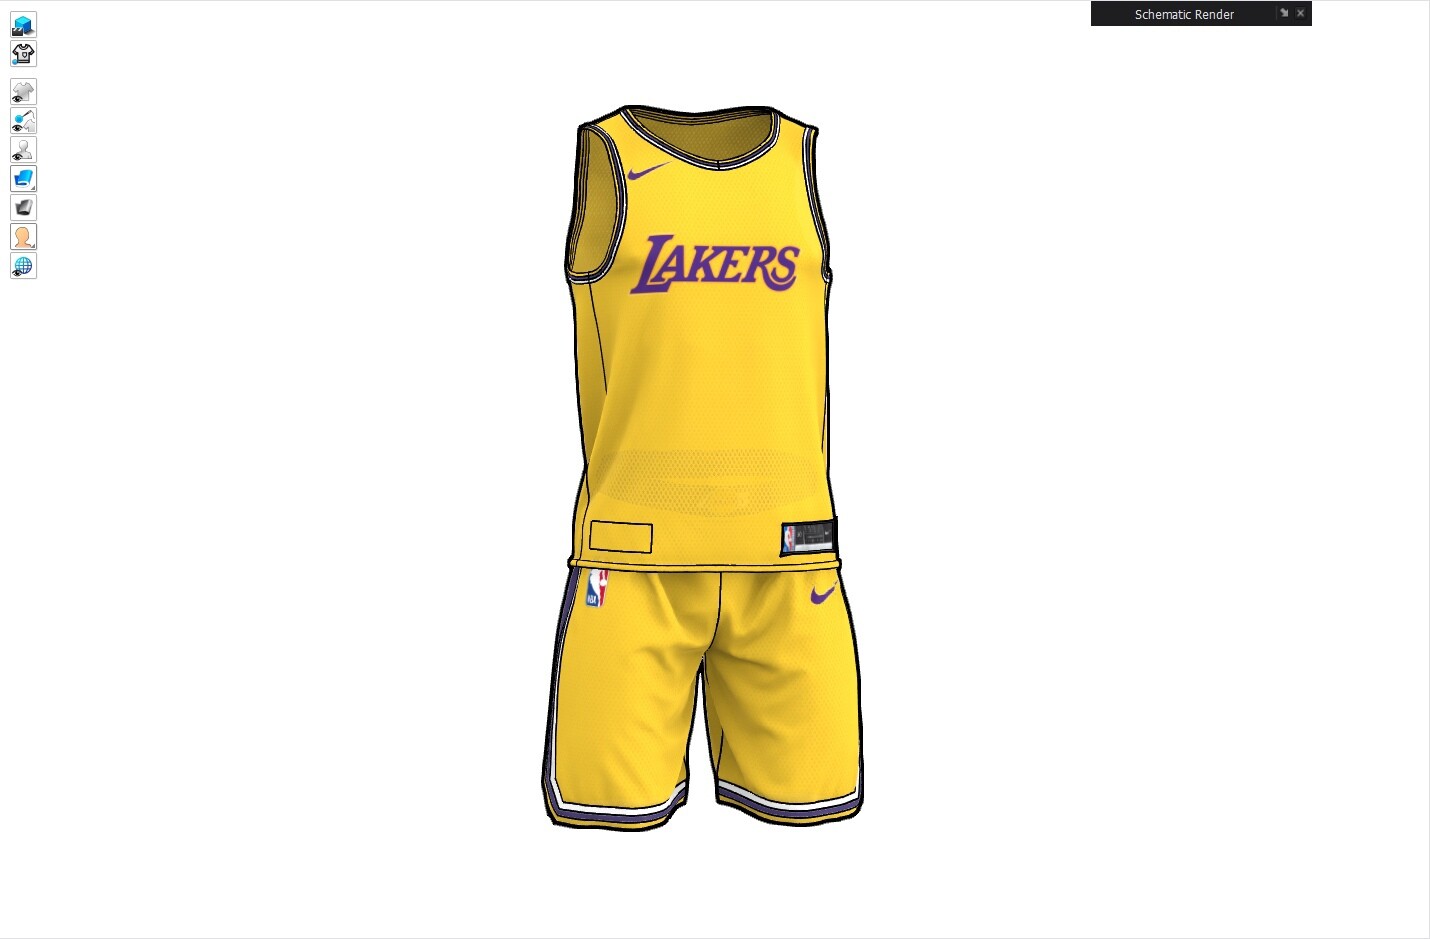 1, NBA Uniforms Project